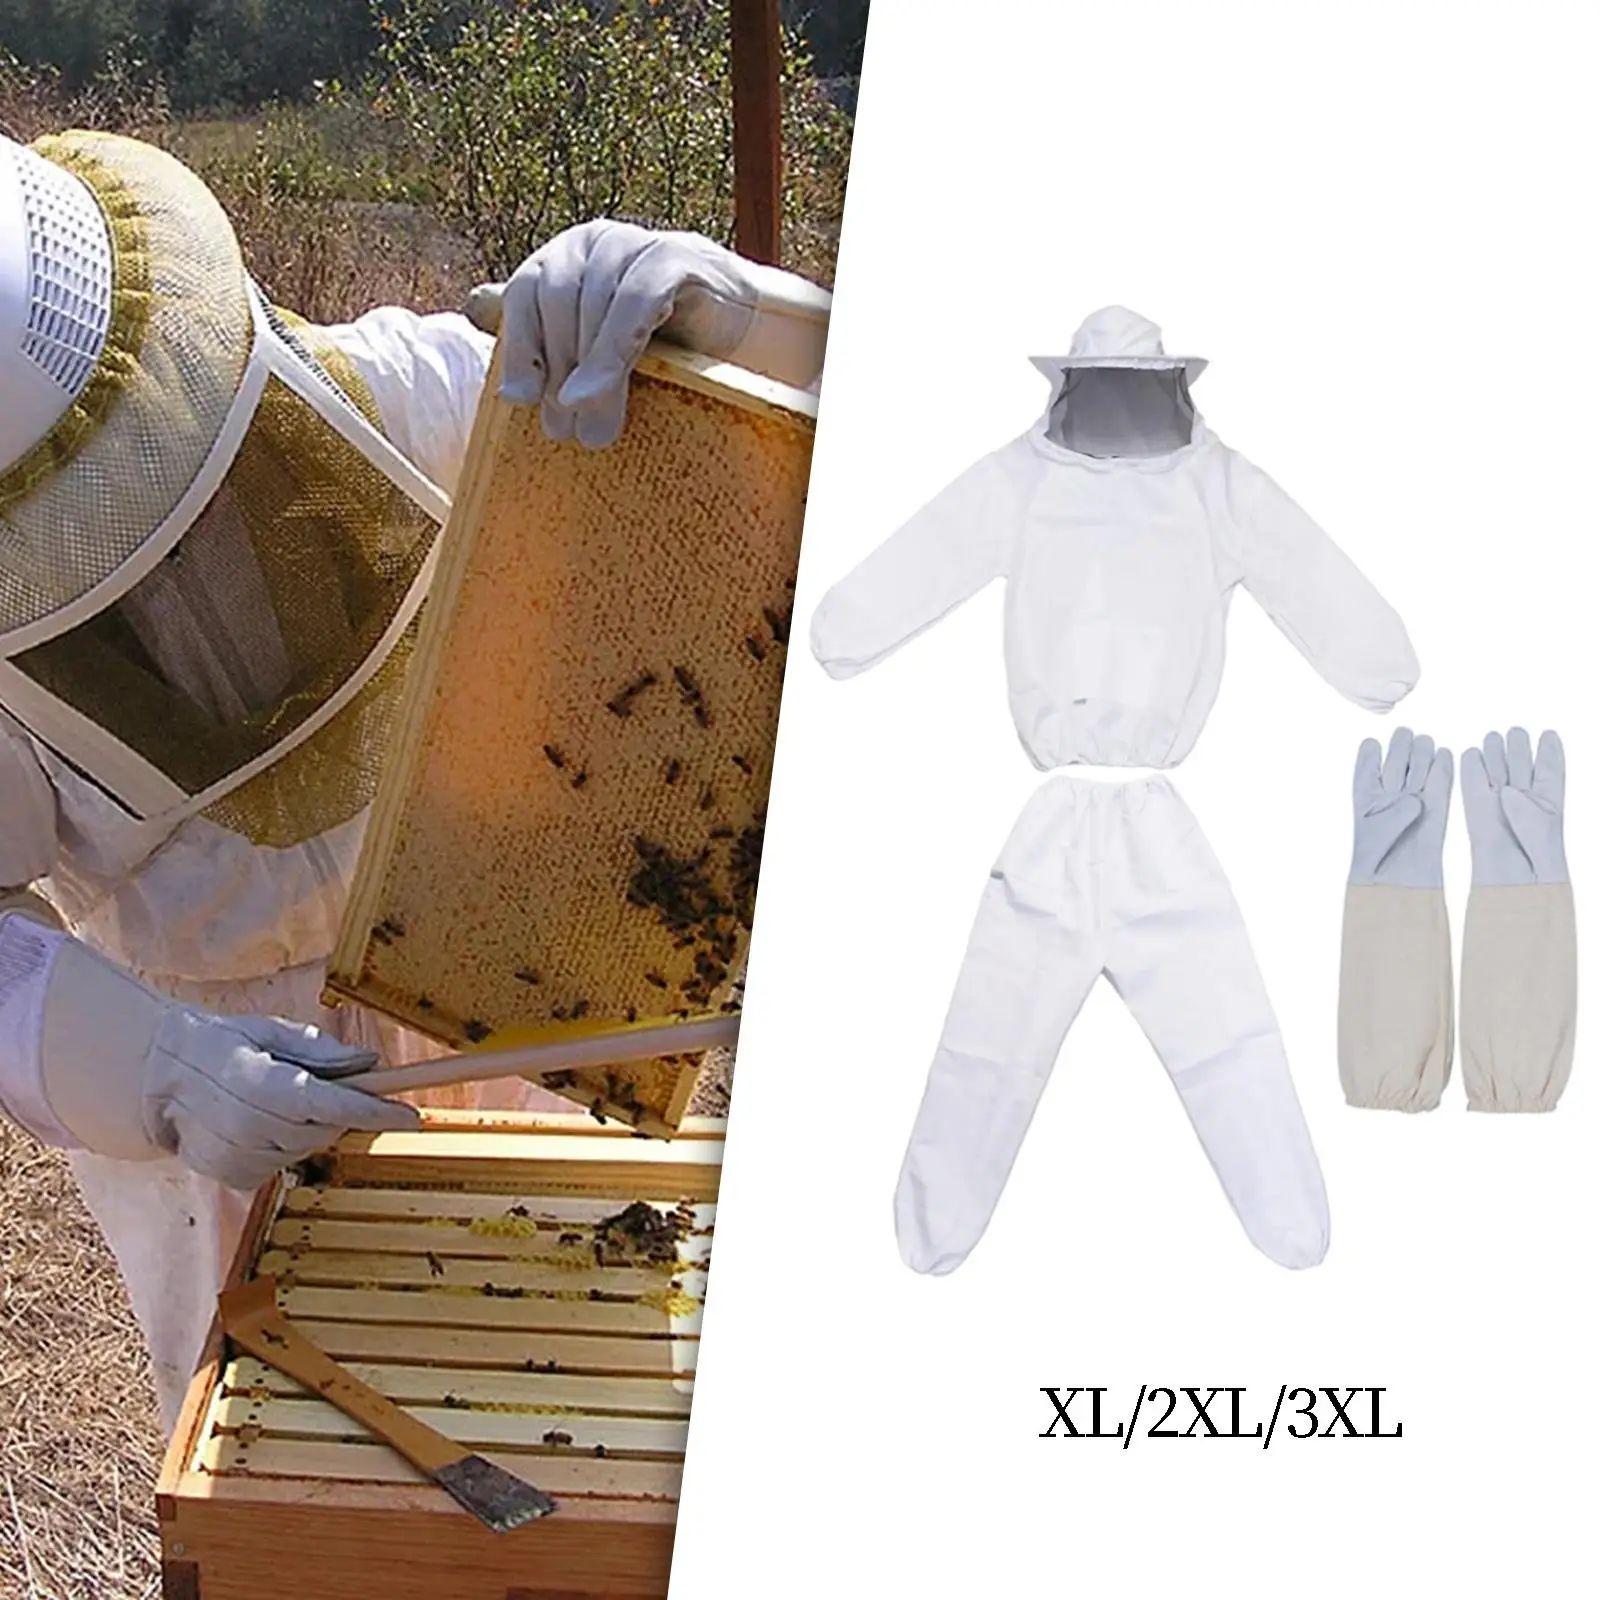 Beekeeping Suit Elastic Cuffs Complete with Glove Bee Suit for Men Women